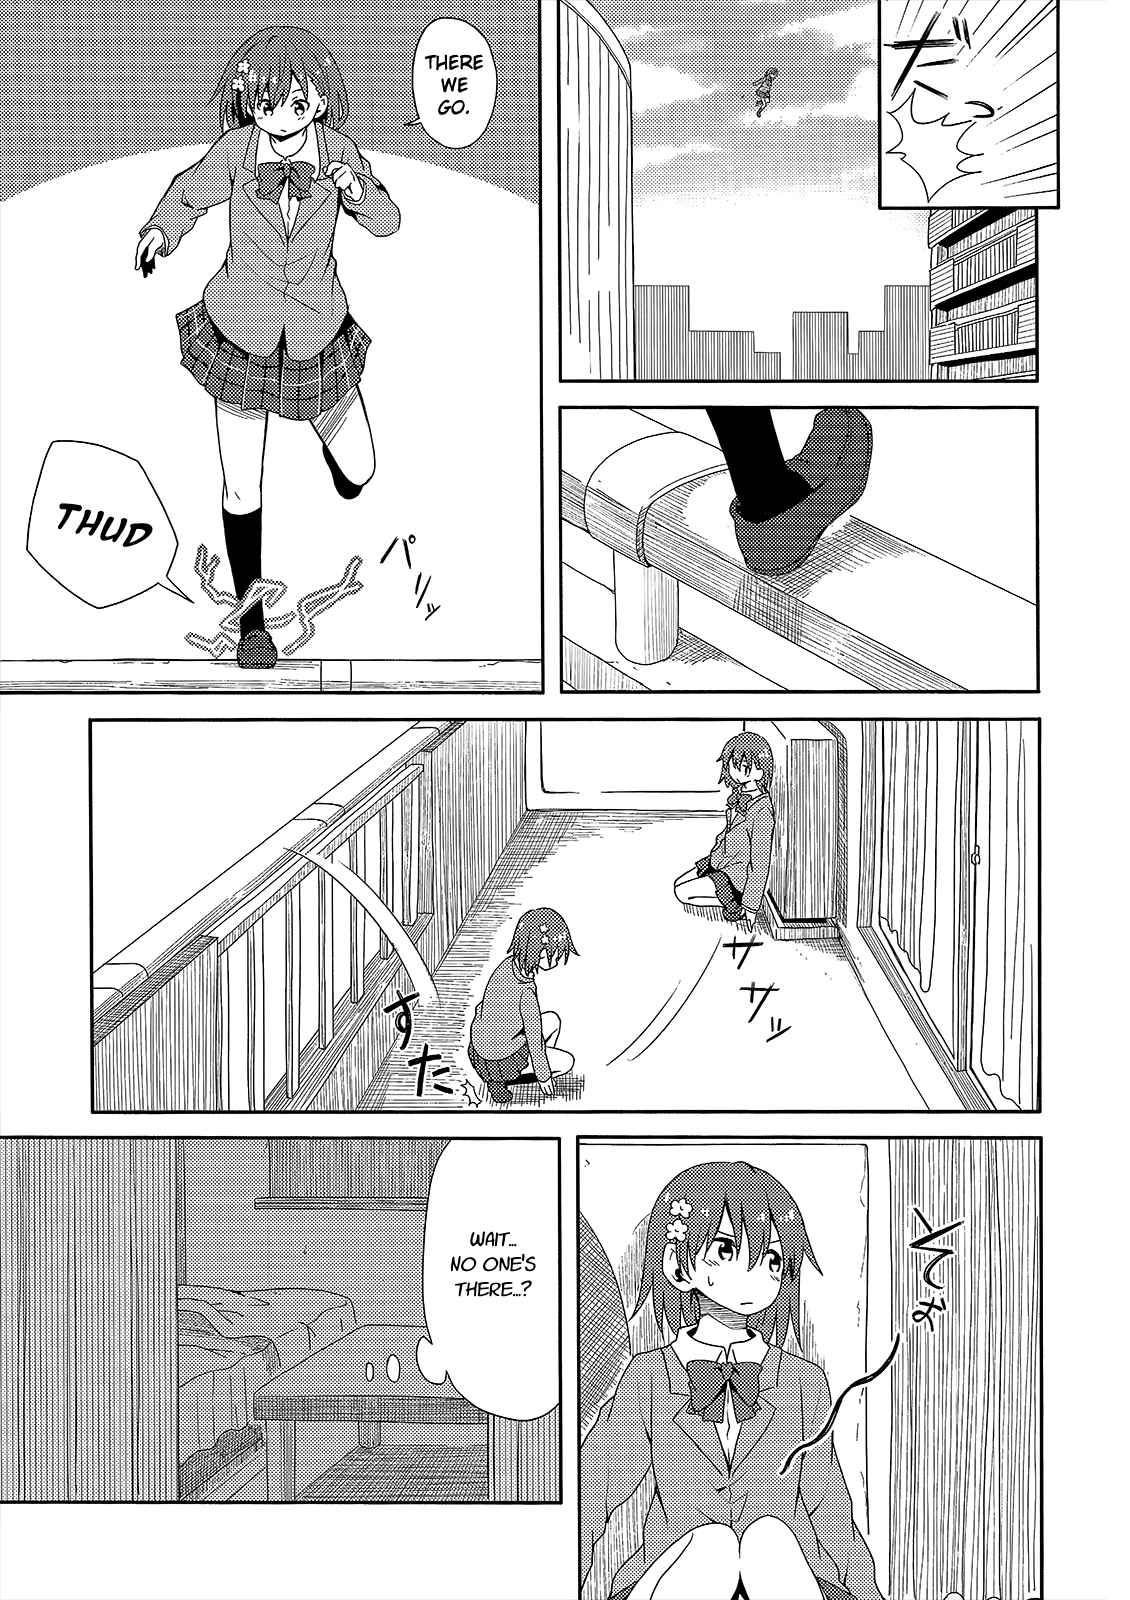 Toaru Majutsu no Index Misaka san stealing underwear (Doujinshi) Oneshot